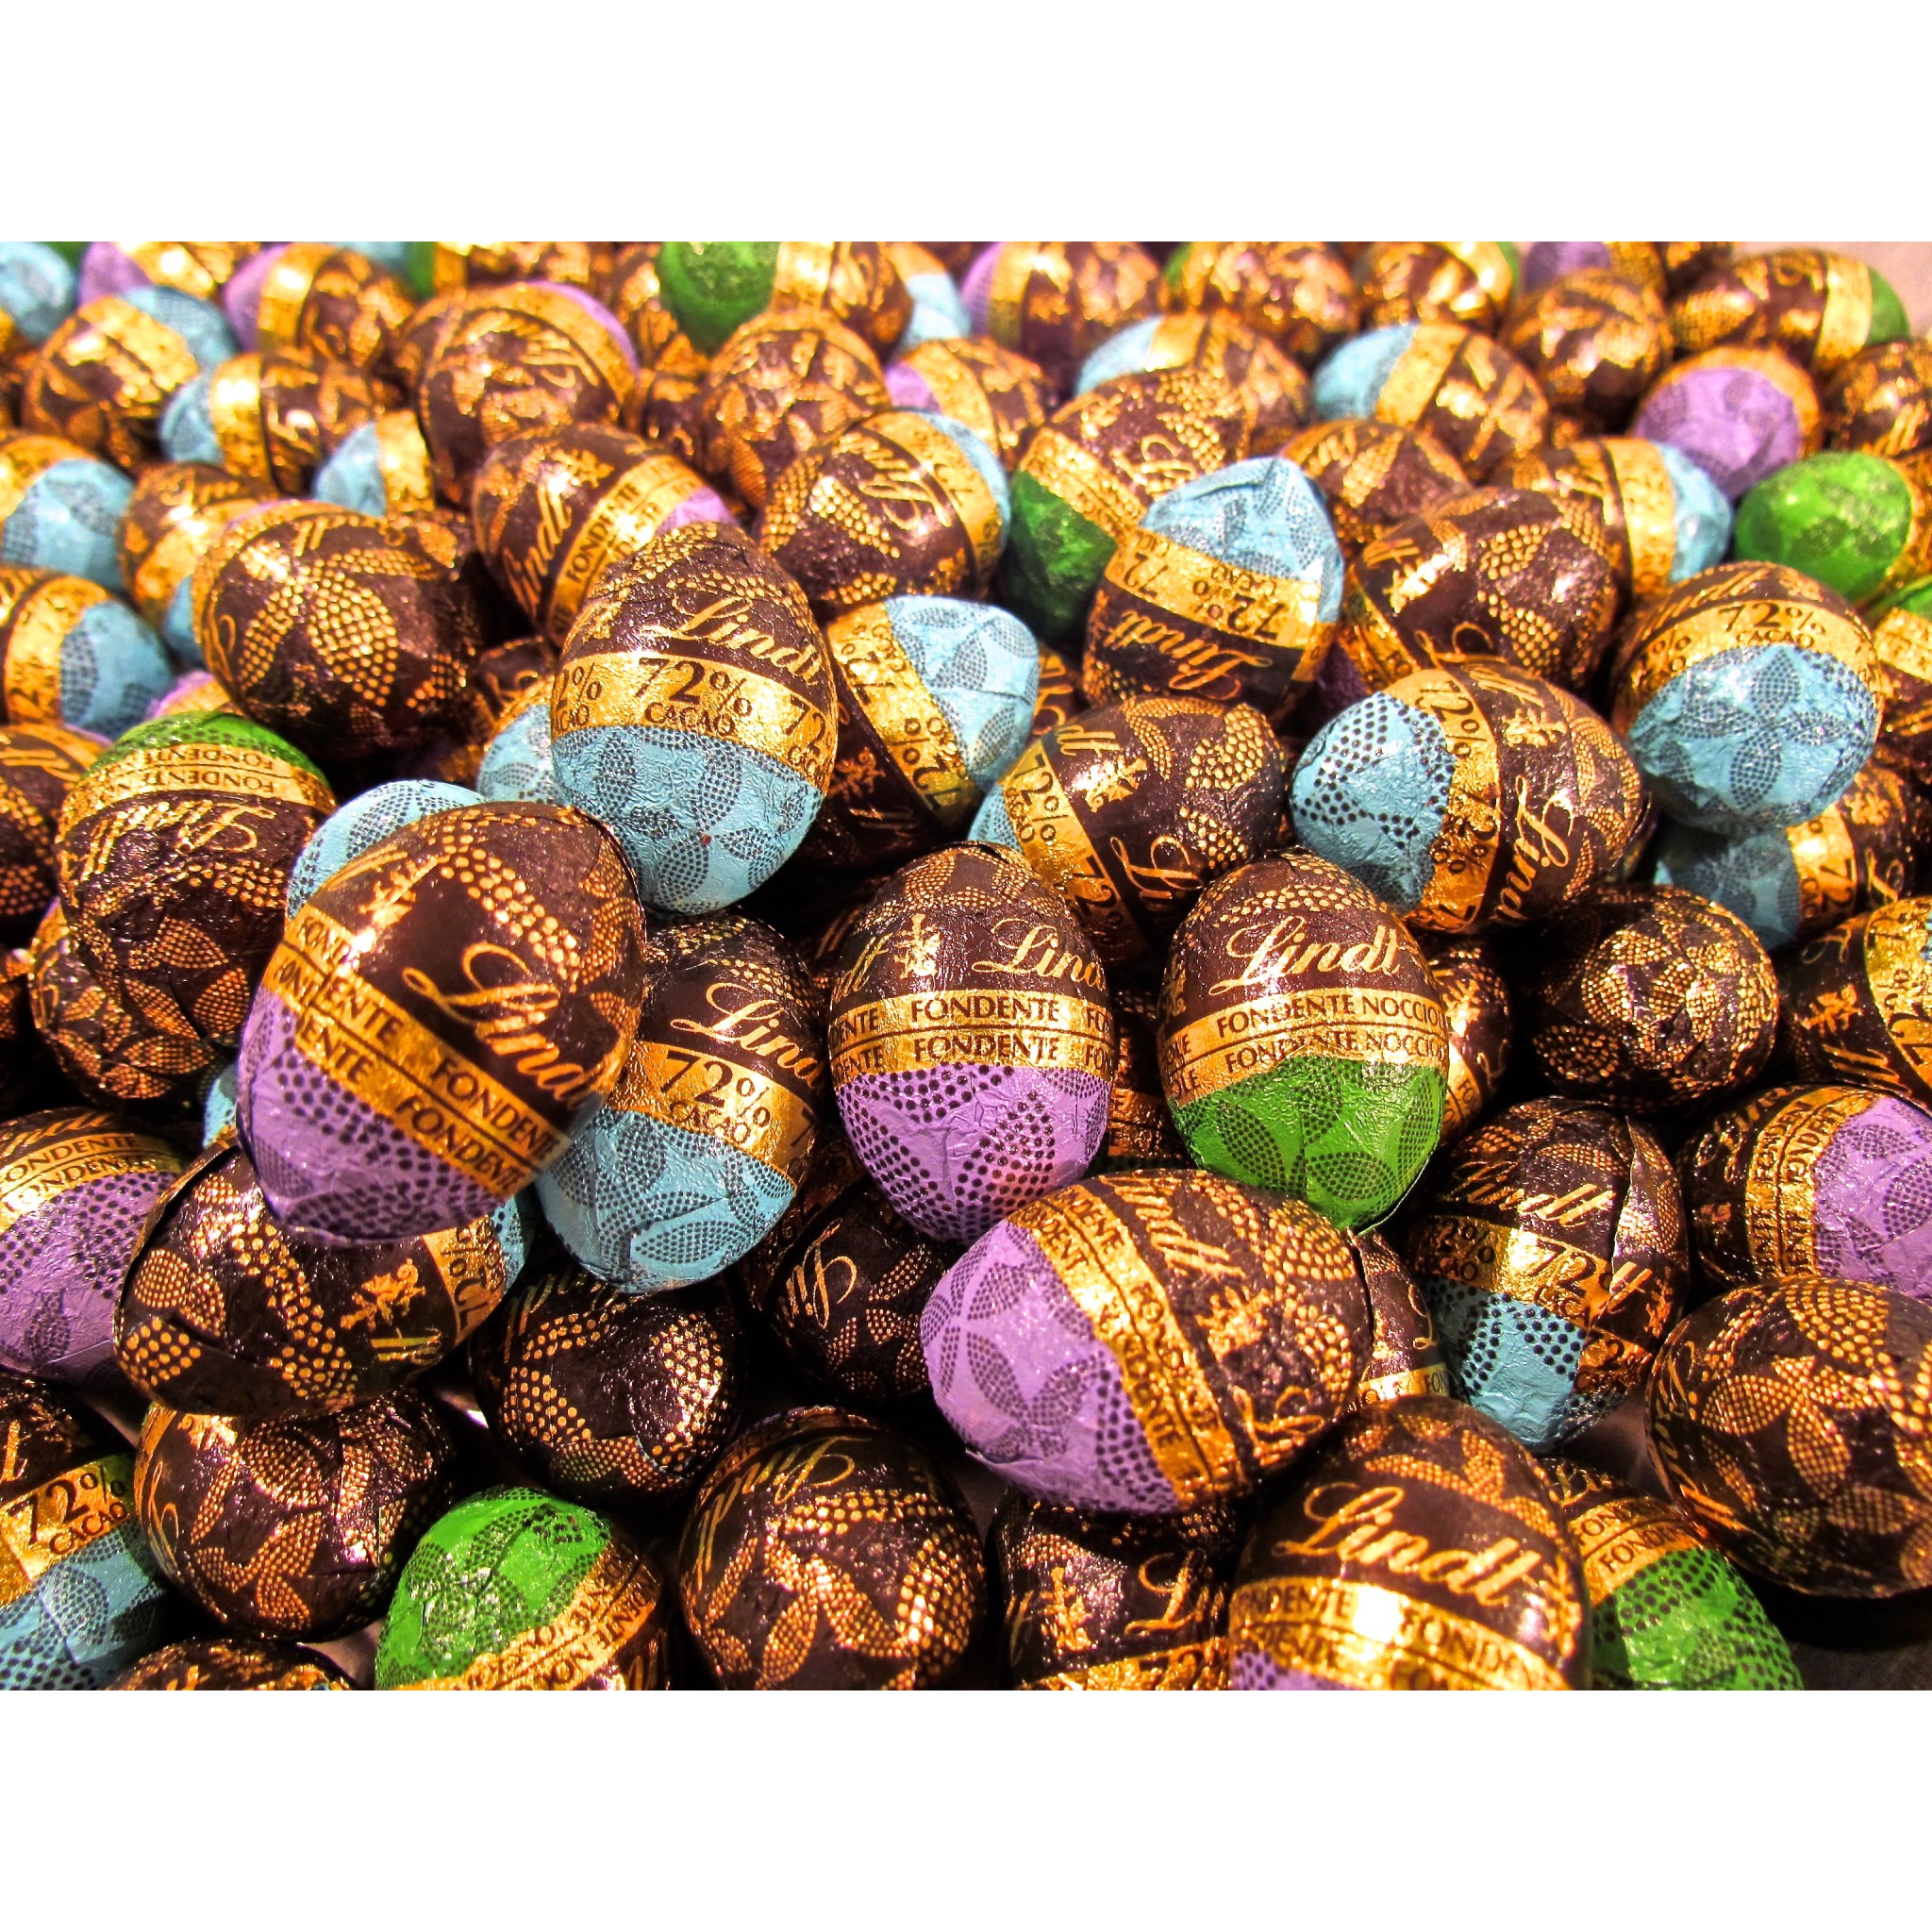 Shop online Easter Eggs Lindt dark chocolate filled with hazelnut ...